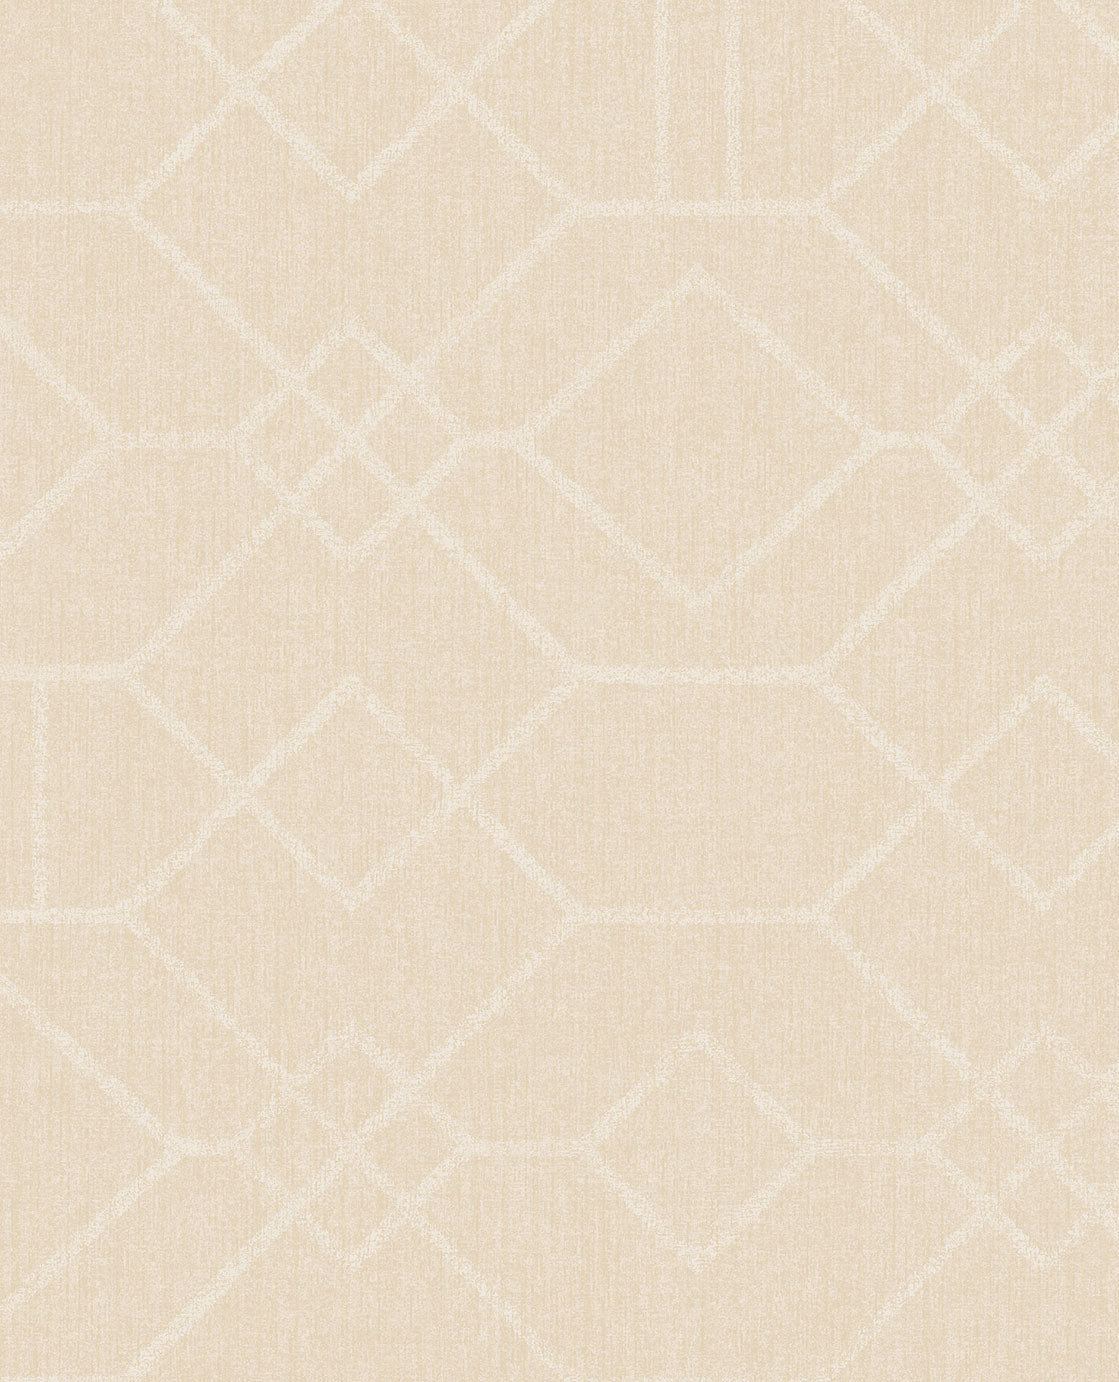 Embrace Lattice Weave wallpaper